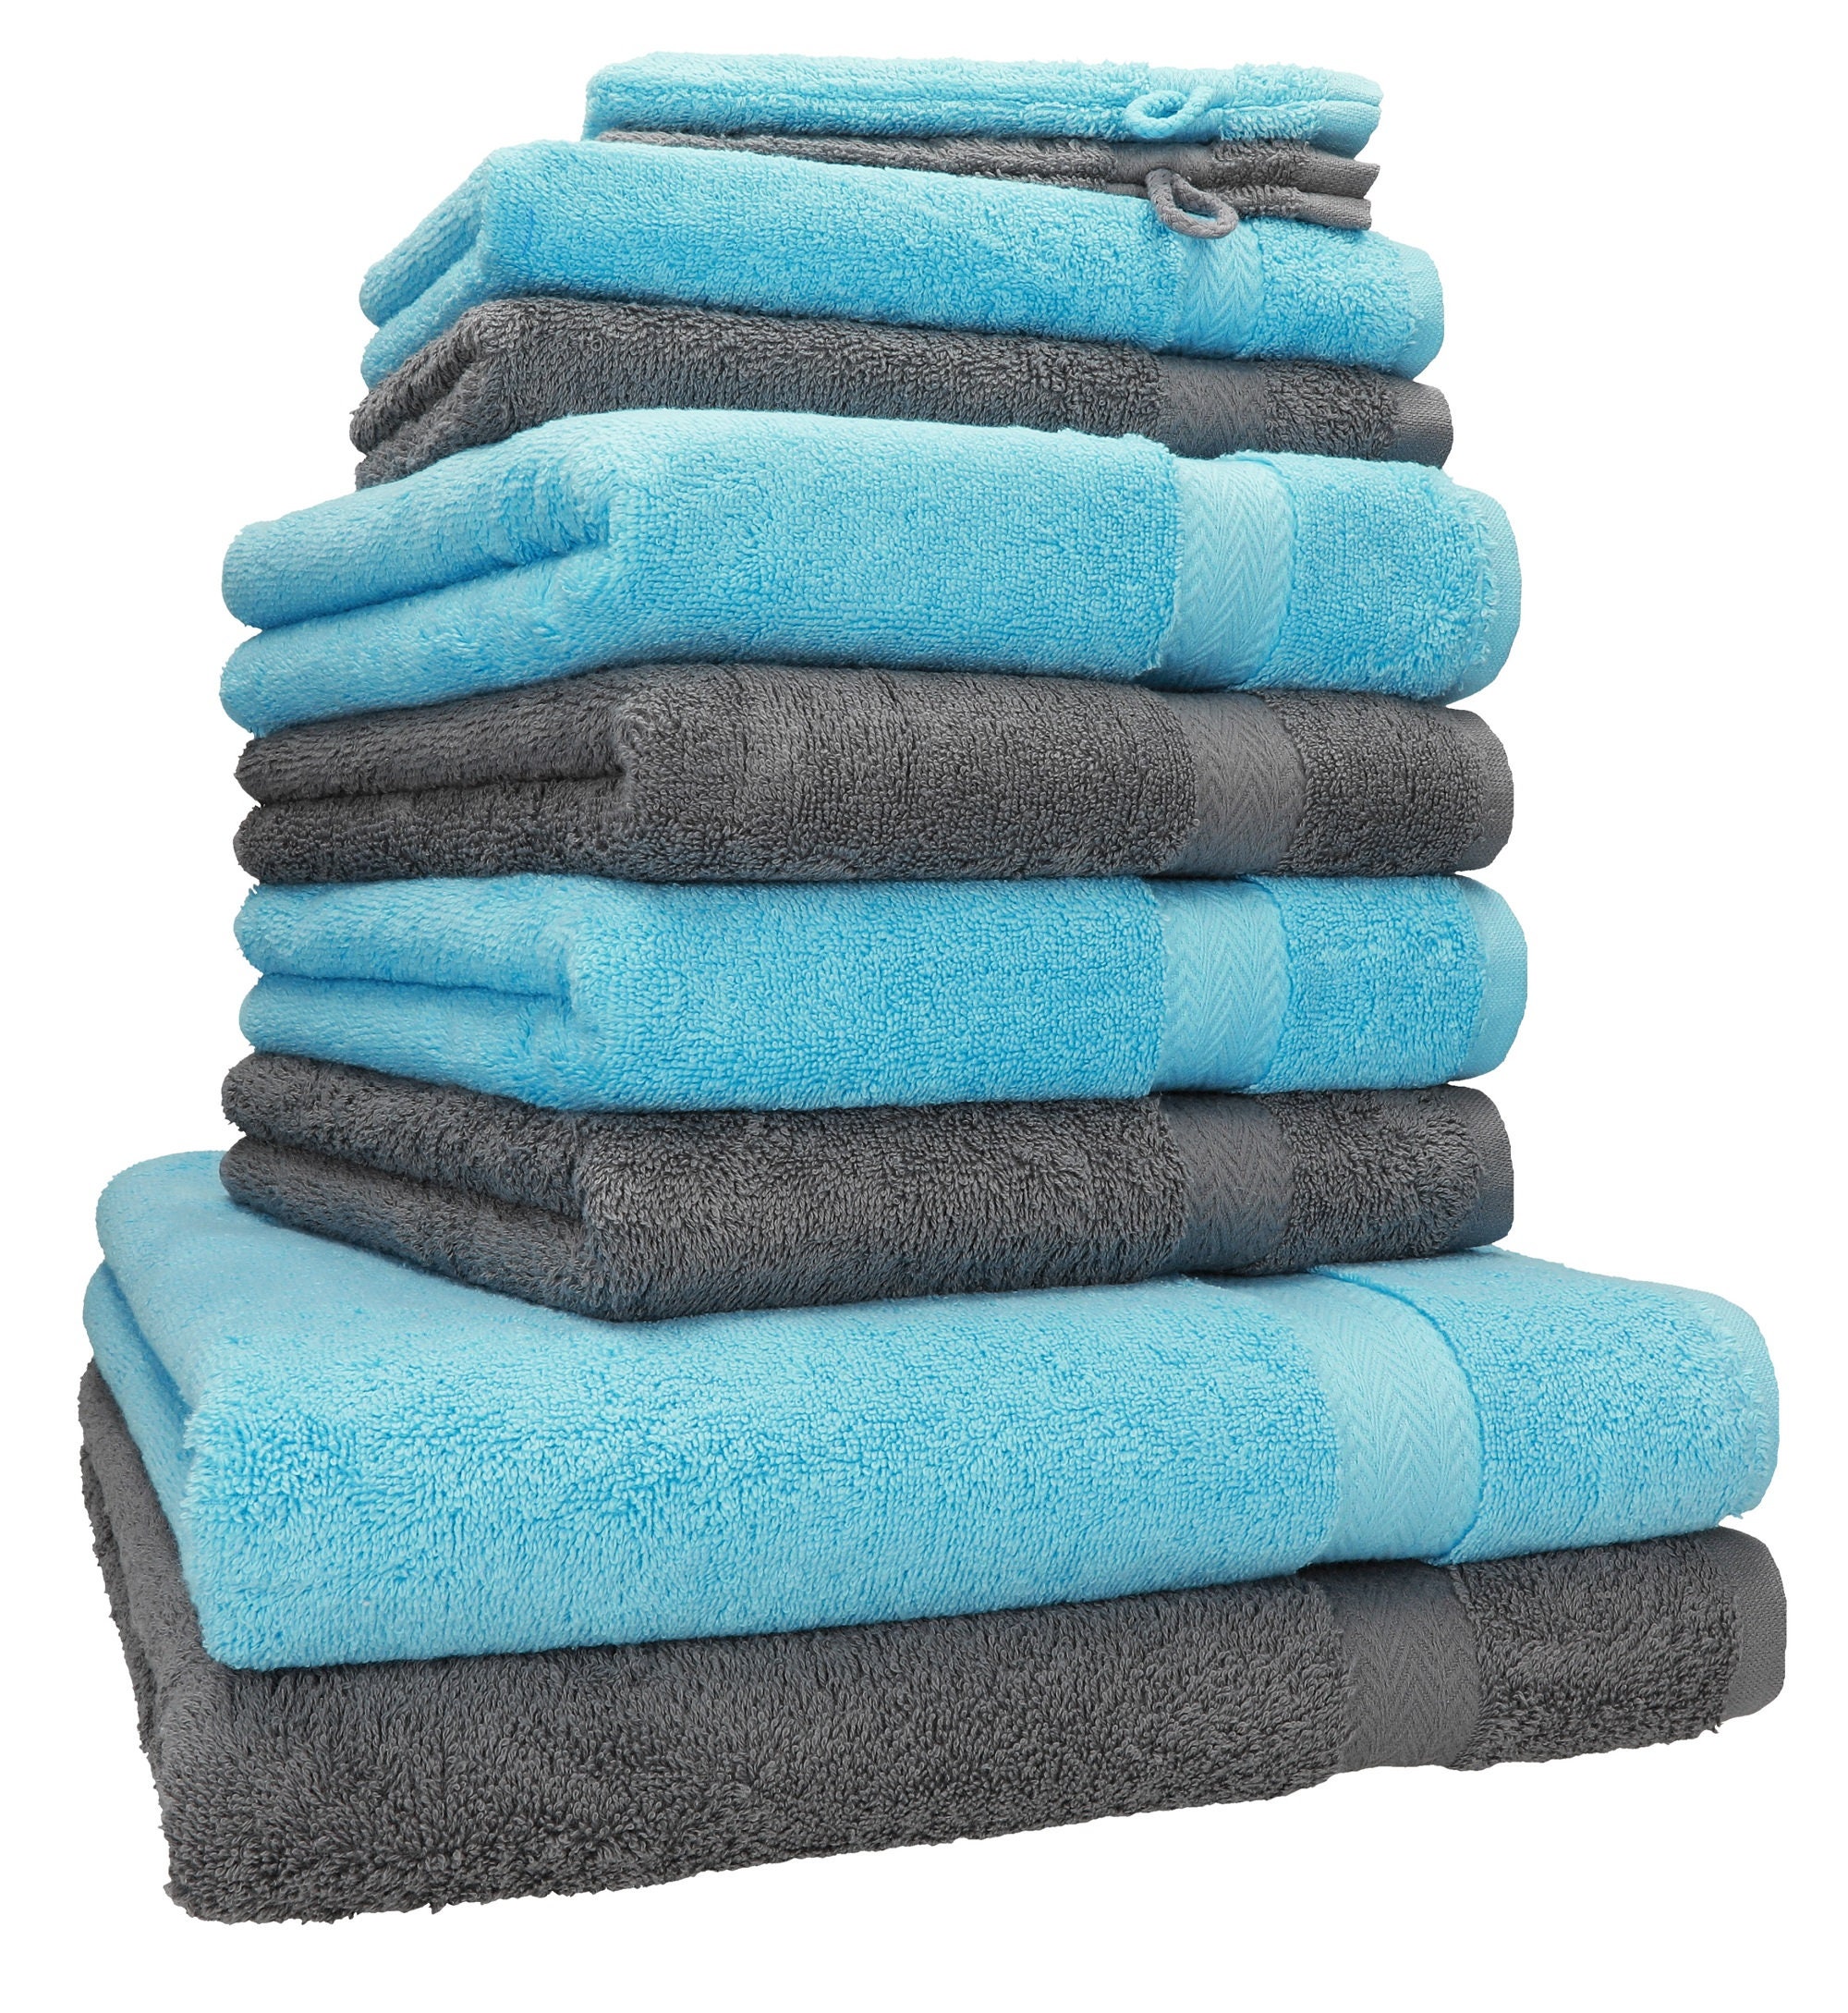 Velour towels